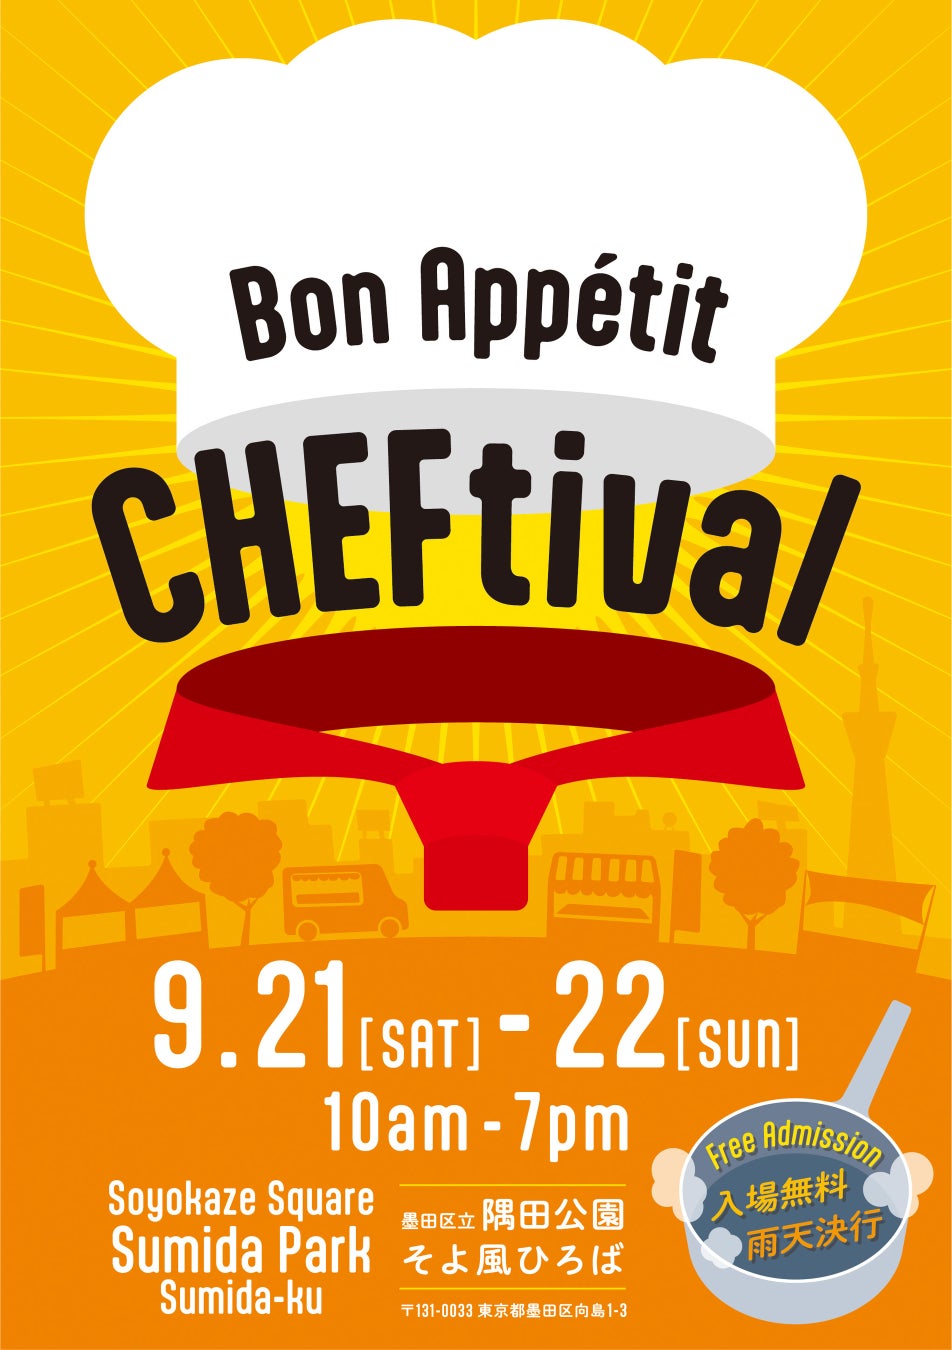 『BON APPETIT CHEFTIVAL』 — “ボナペティ シェフティバル”　食欲の秋　9月21(土)＆22(日)　墨田区立隅田公園そよ風ひろばで、国際フードフェスを開催　入場無料